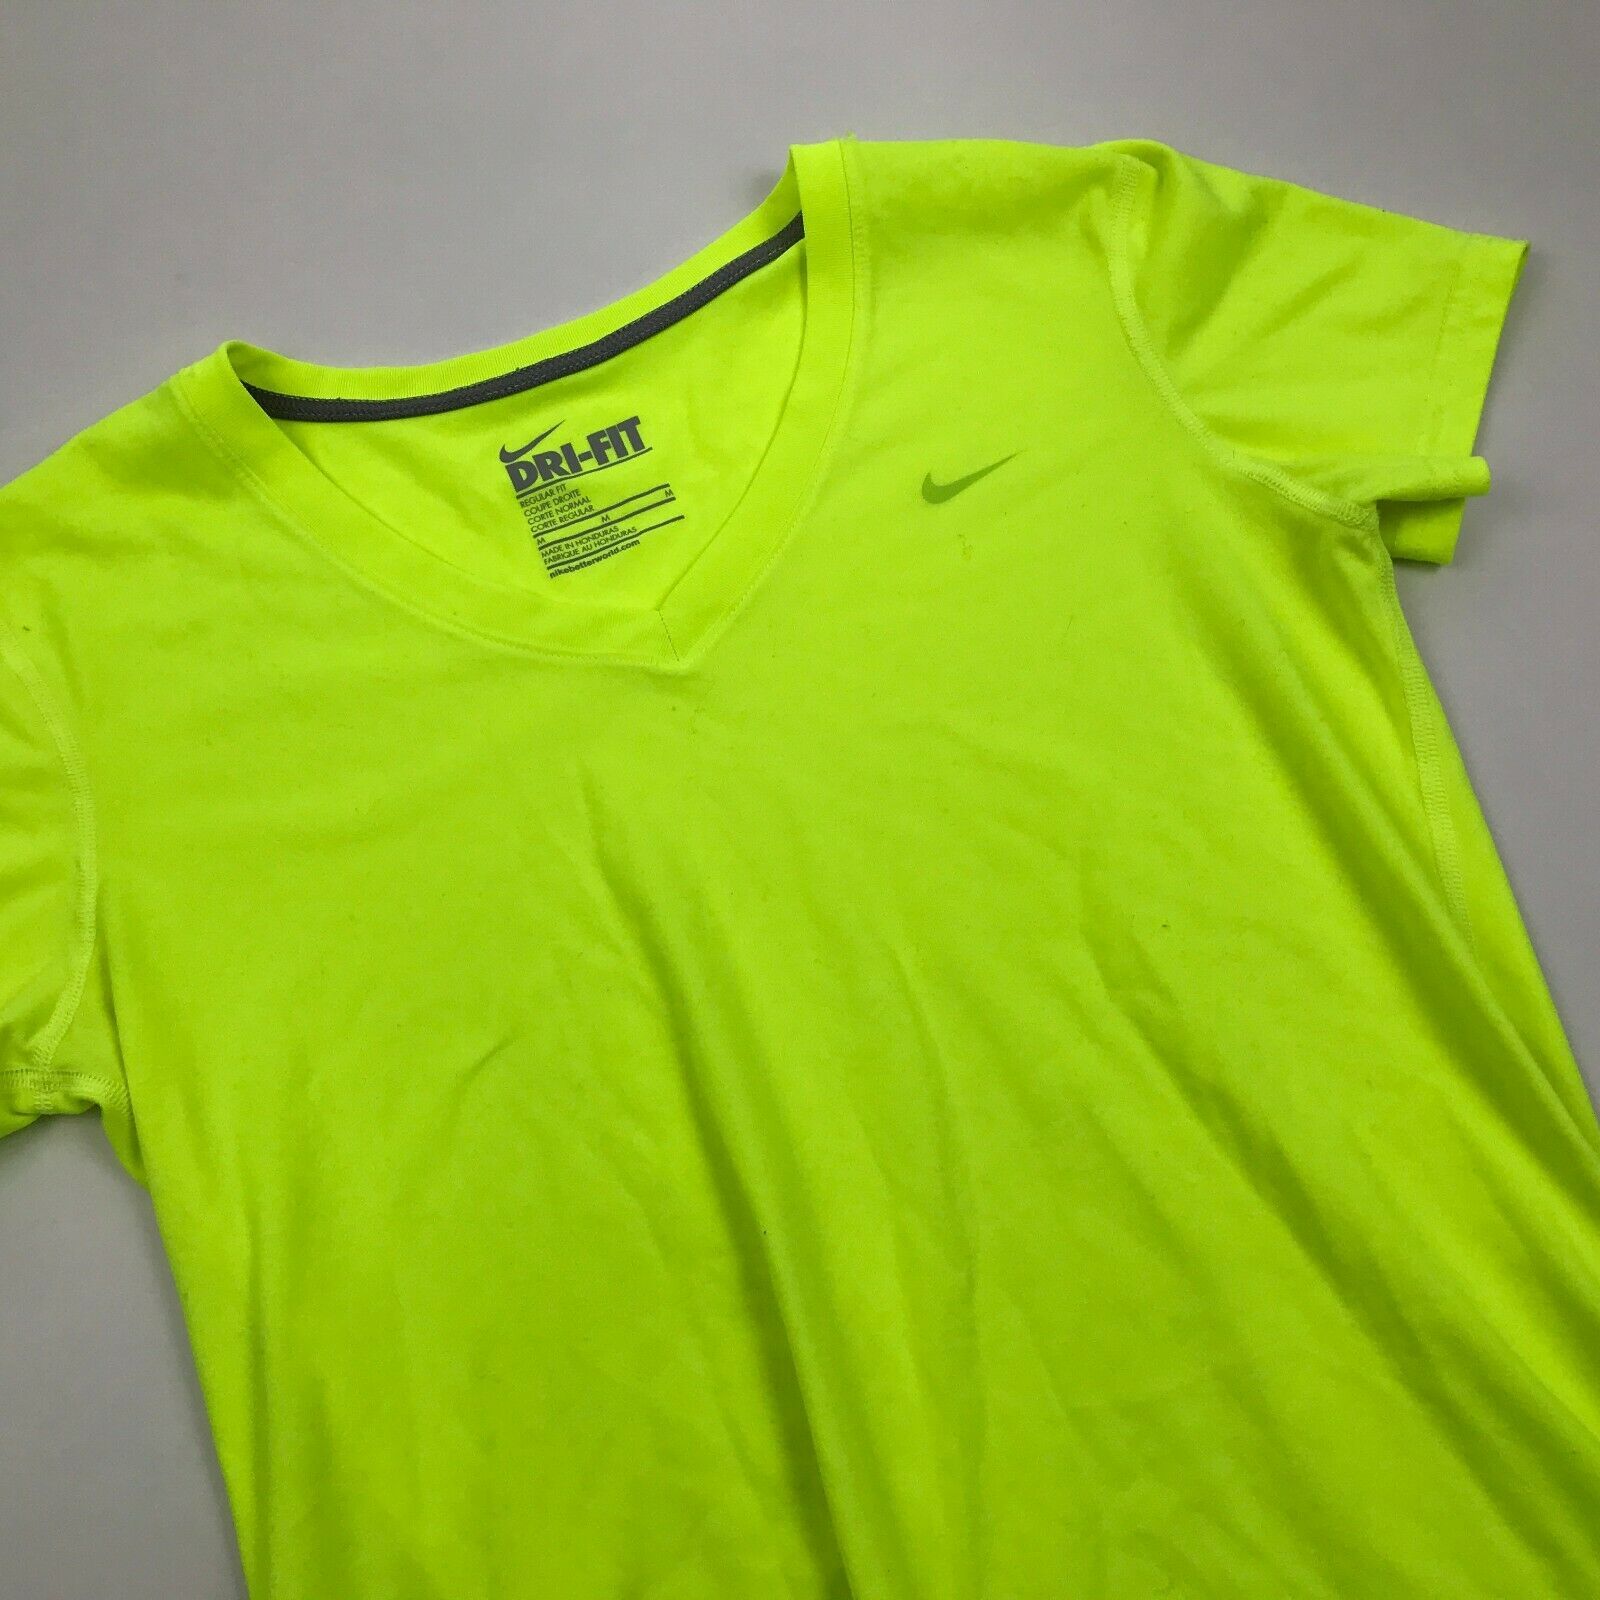 Nike Neon Green V-neck Shirt Size M Medium Regular Dry Fit Short Sleeve DRI-FIT - Activewear Tops